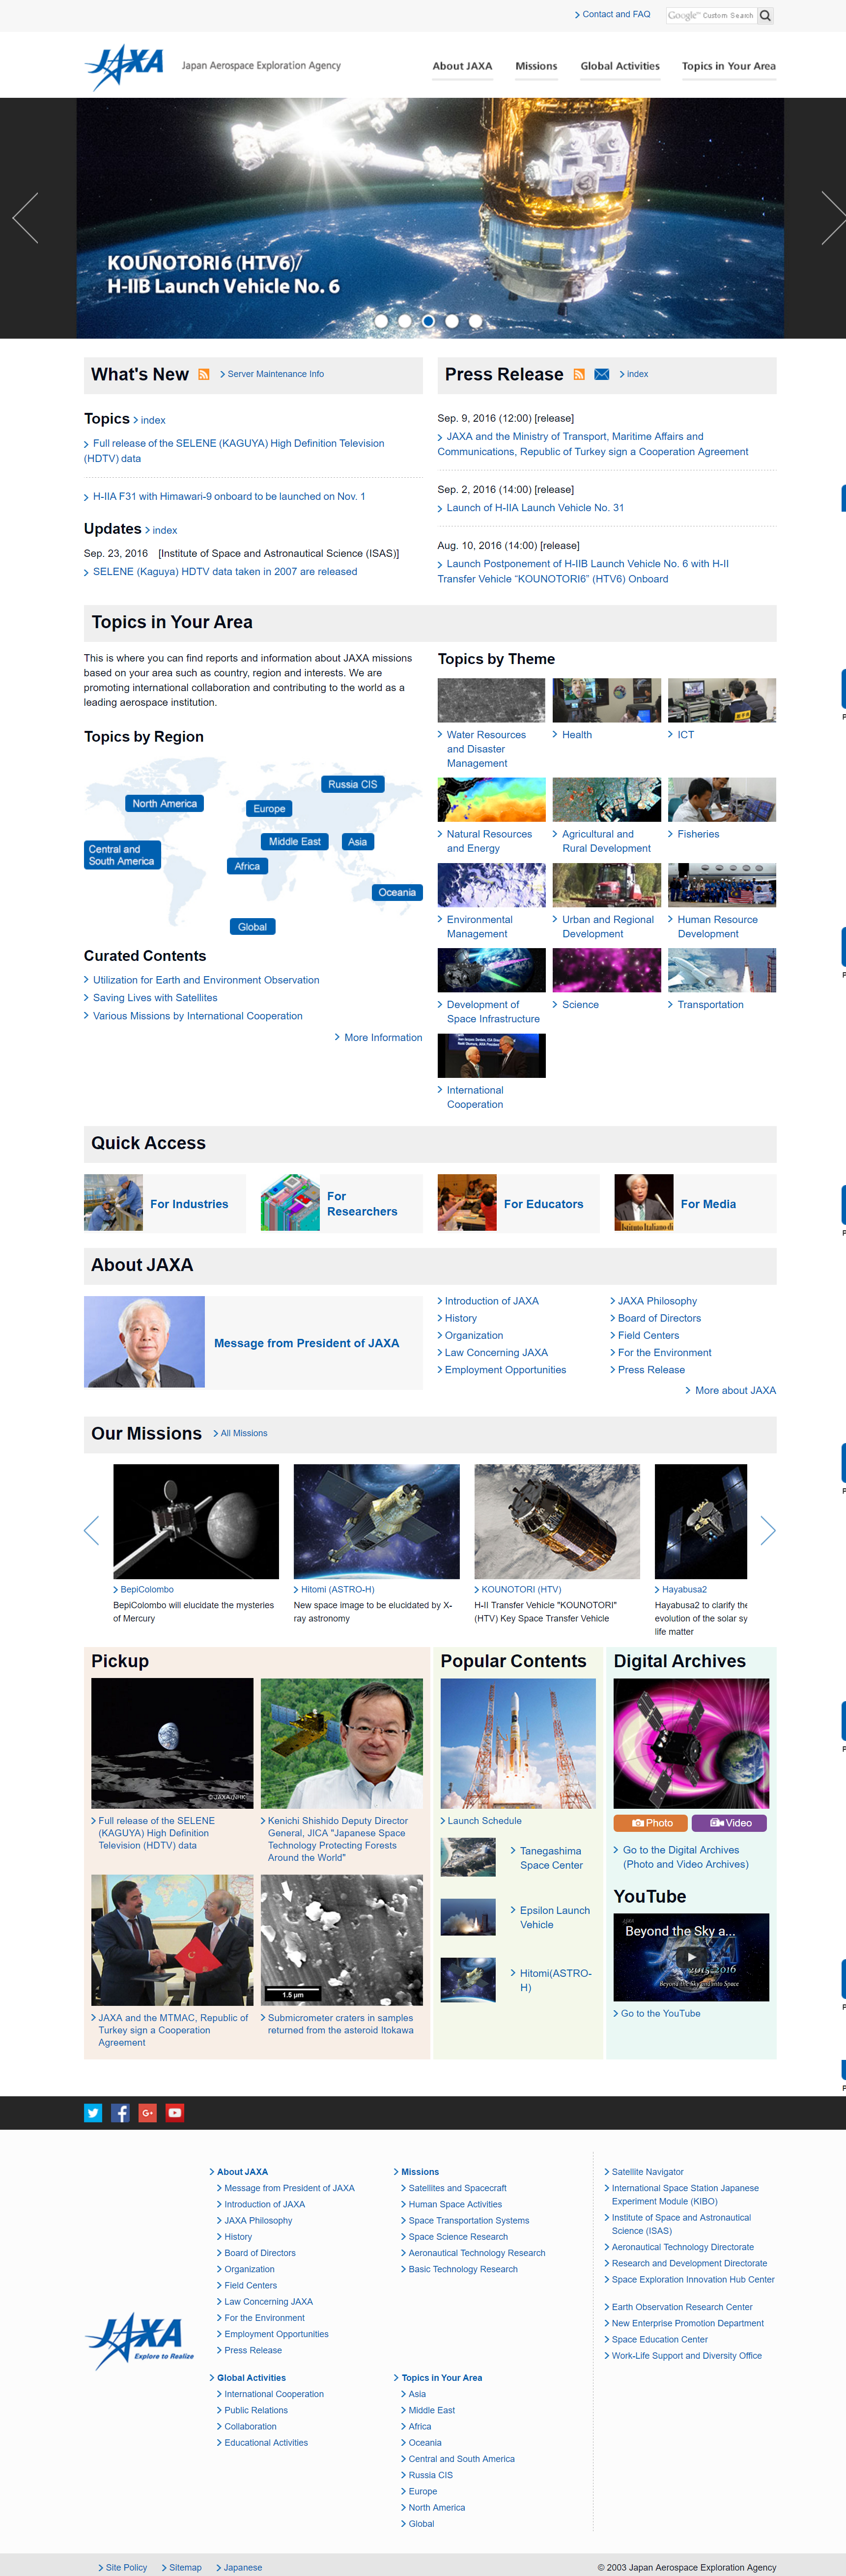 JAXA space website design